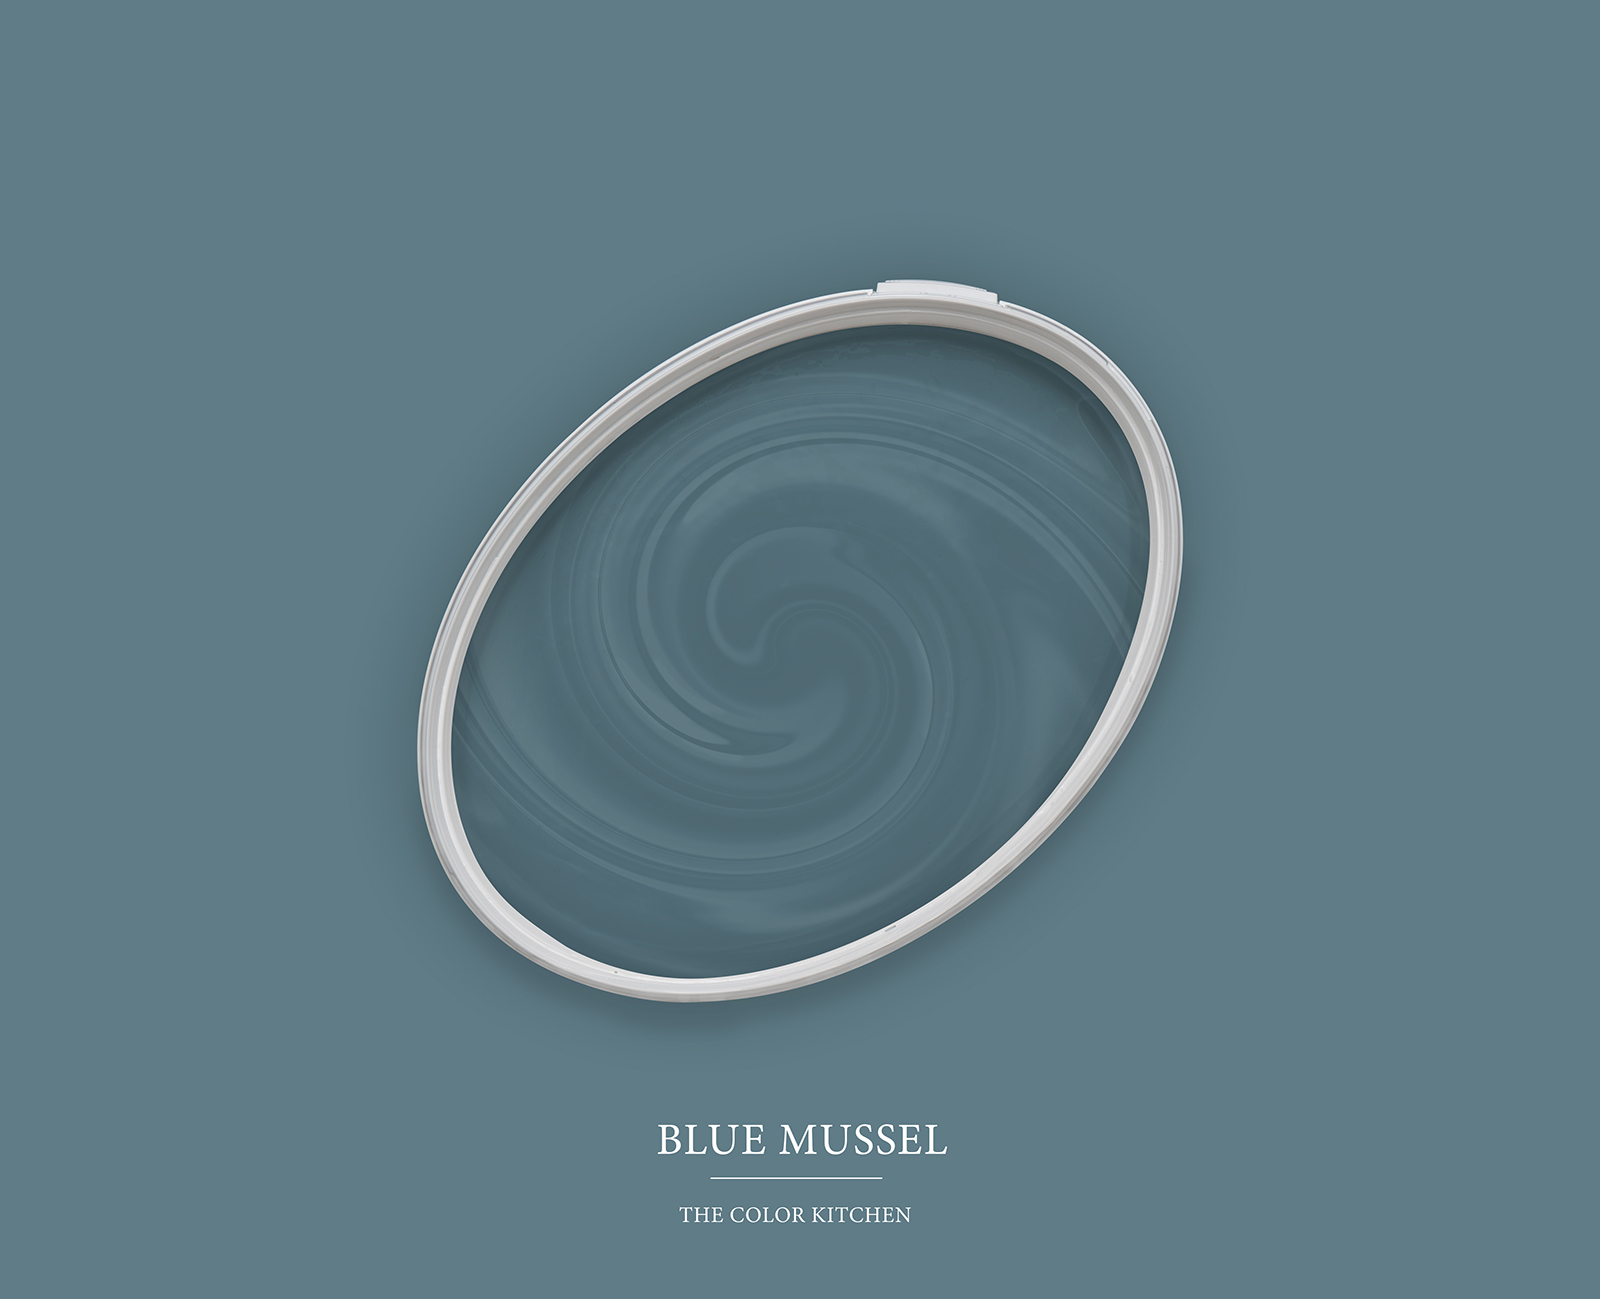         Wandfarbe in ruhigem Blaugrau »Blue Mussel« TCK3011 – 2,5 Liter
    